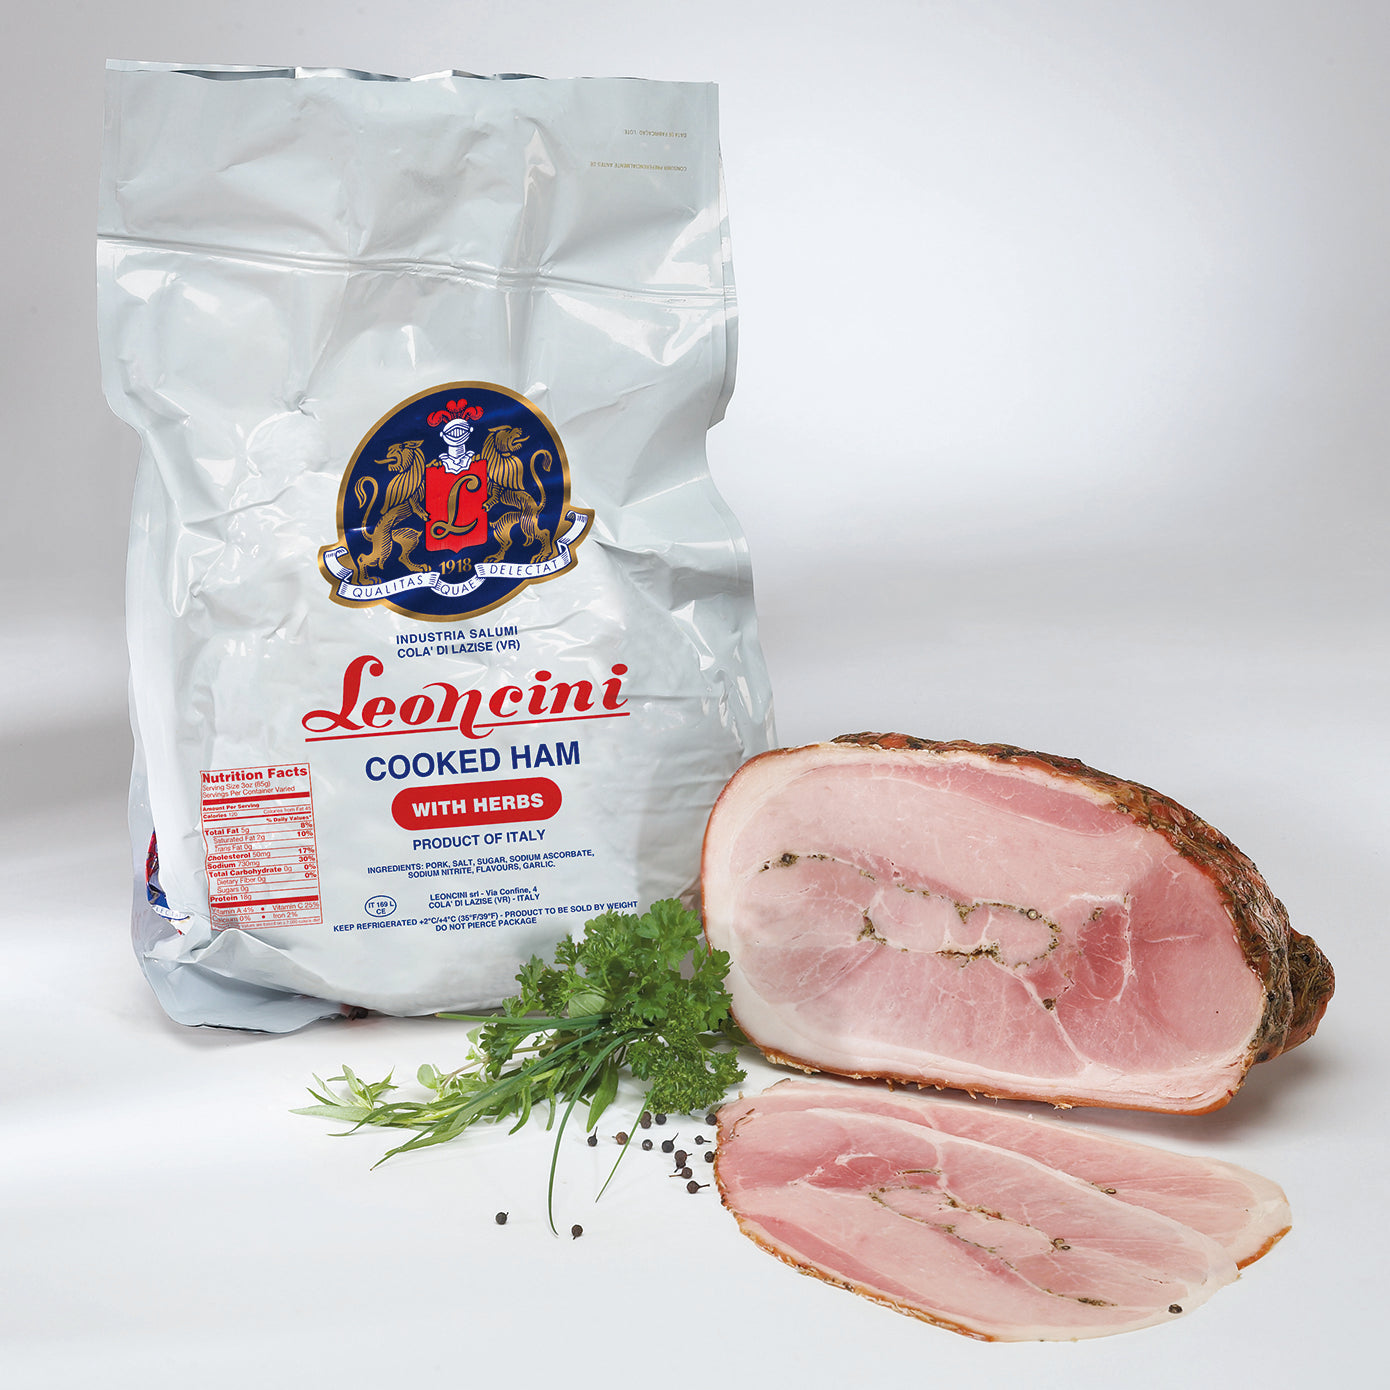 Oven Roasted Ham with Herbs - igourmet